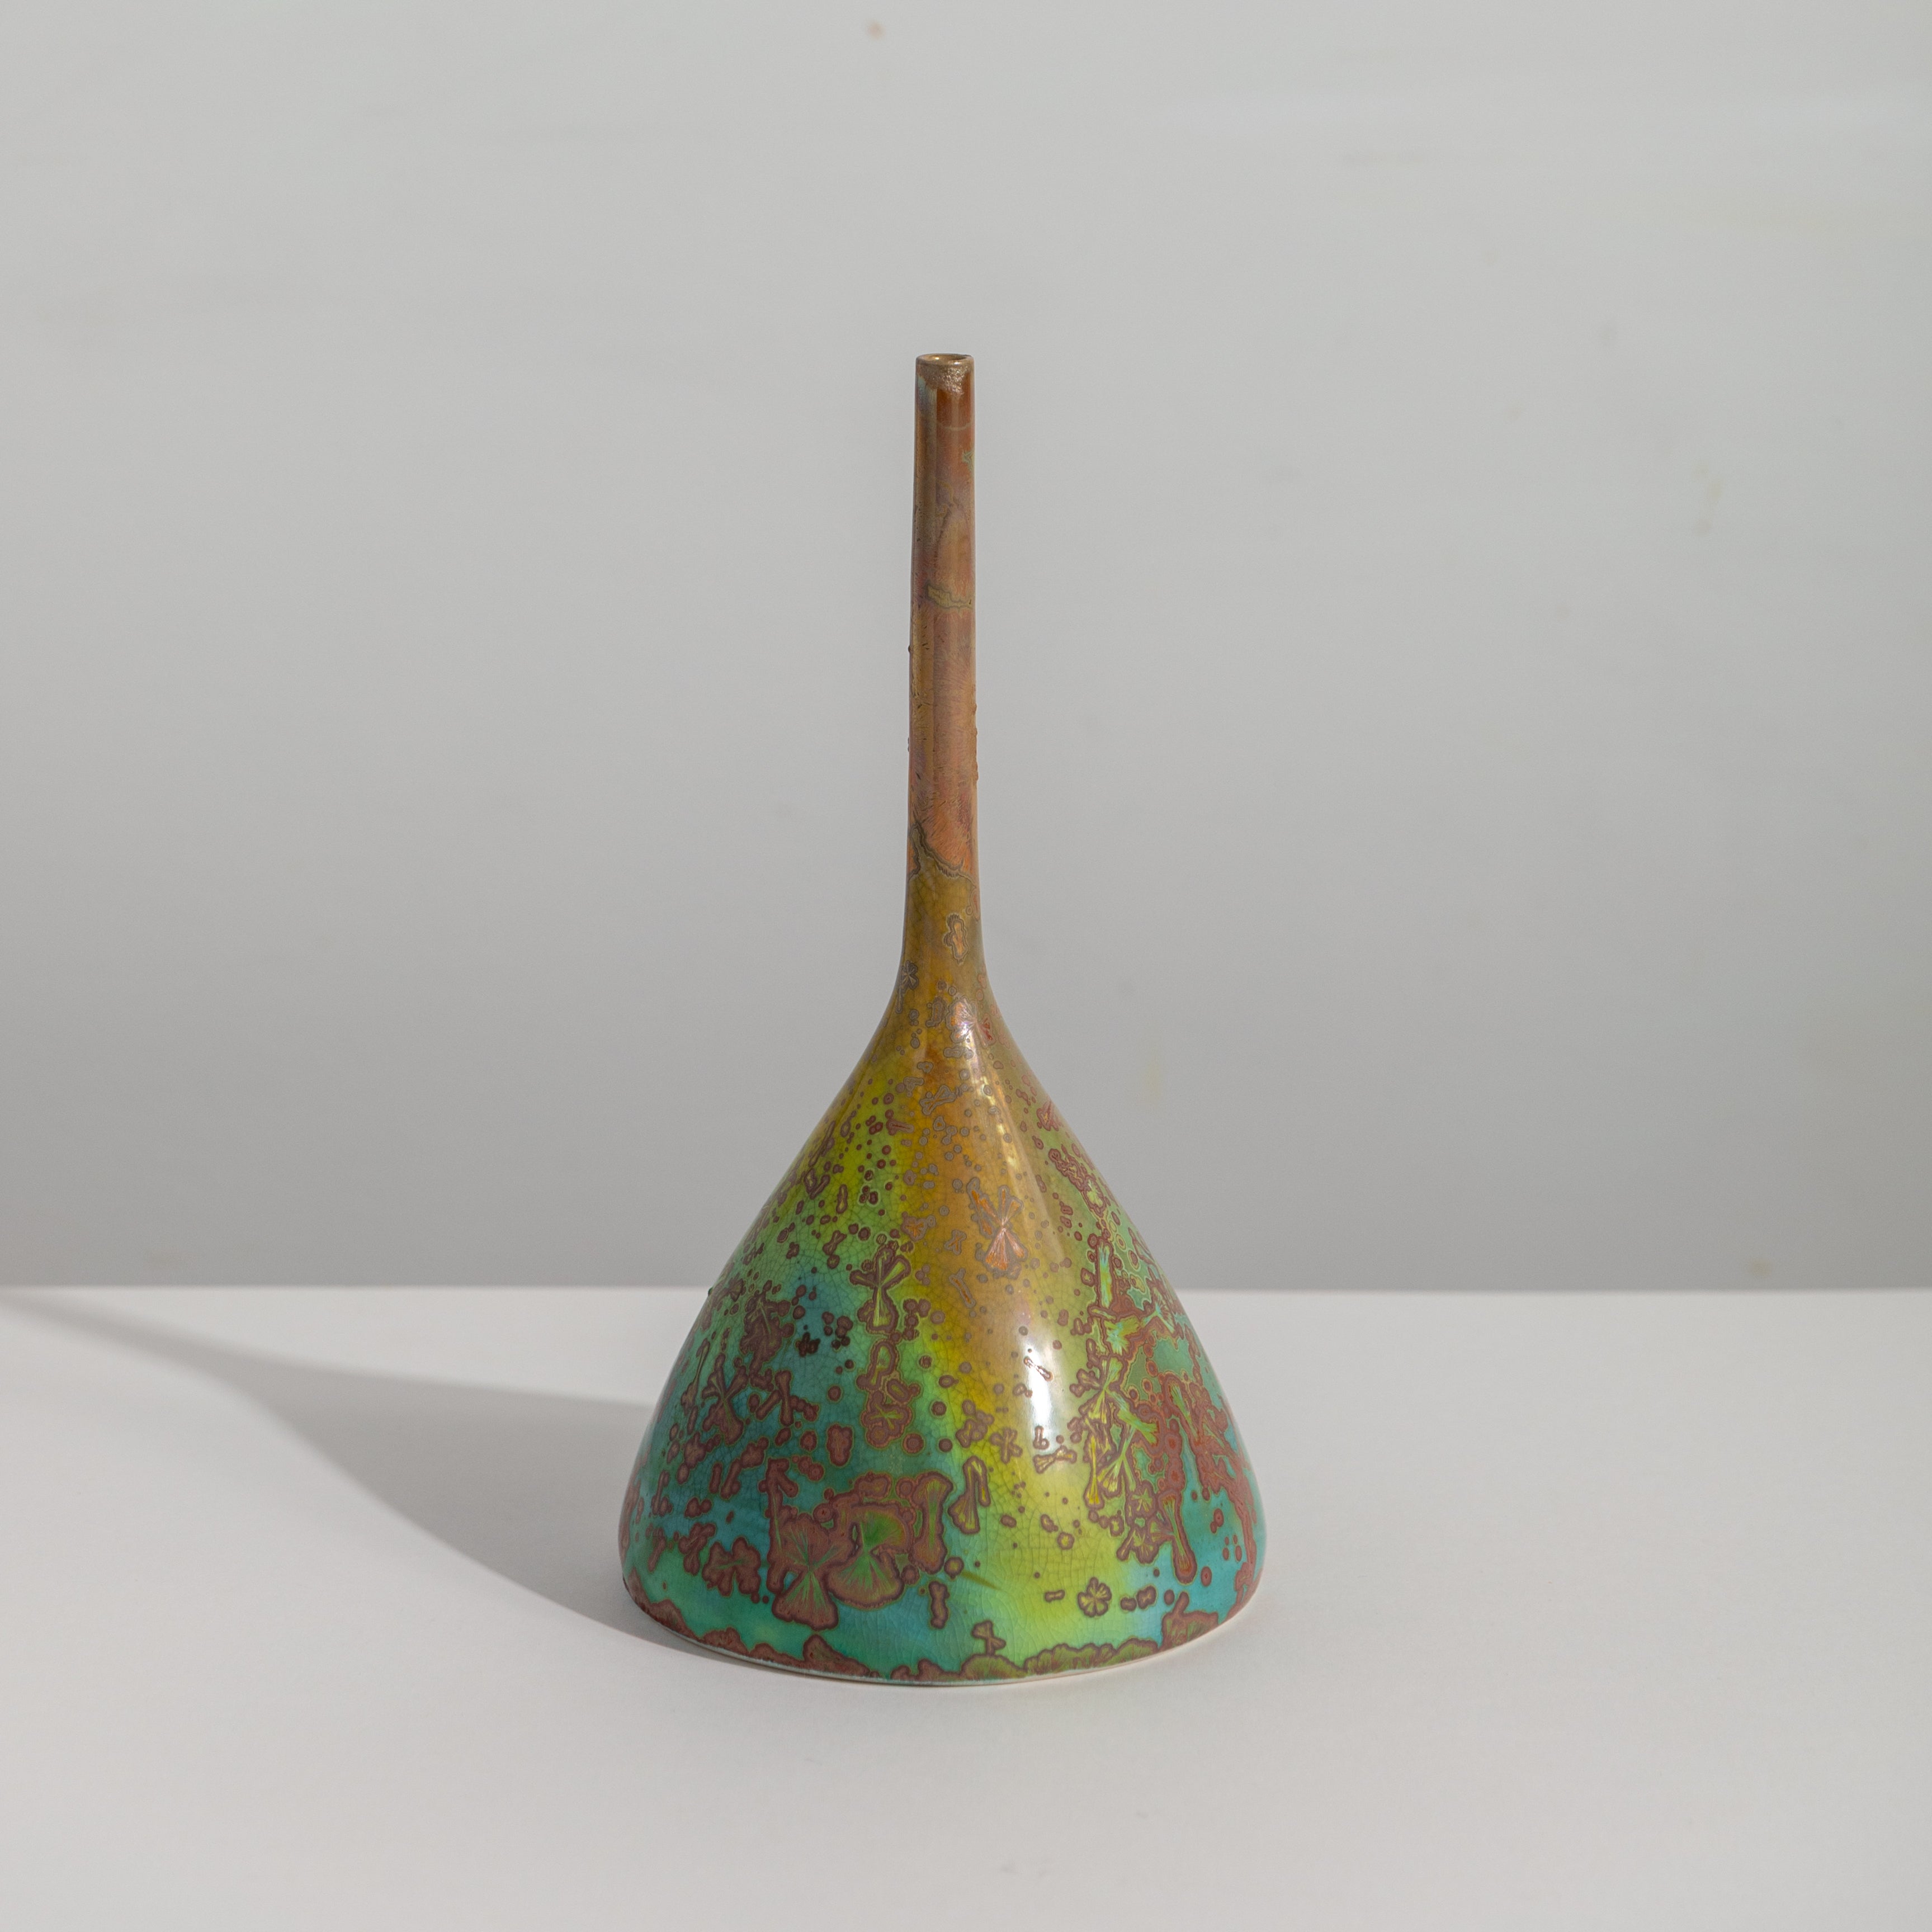 Hand-thrown porcelain vase with crystalline glaze made in NYC by Robert Hessler